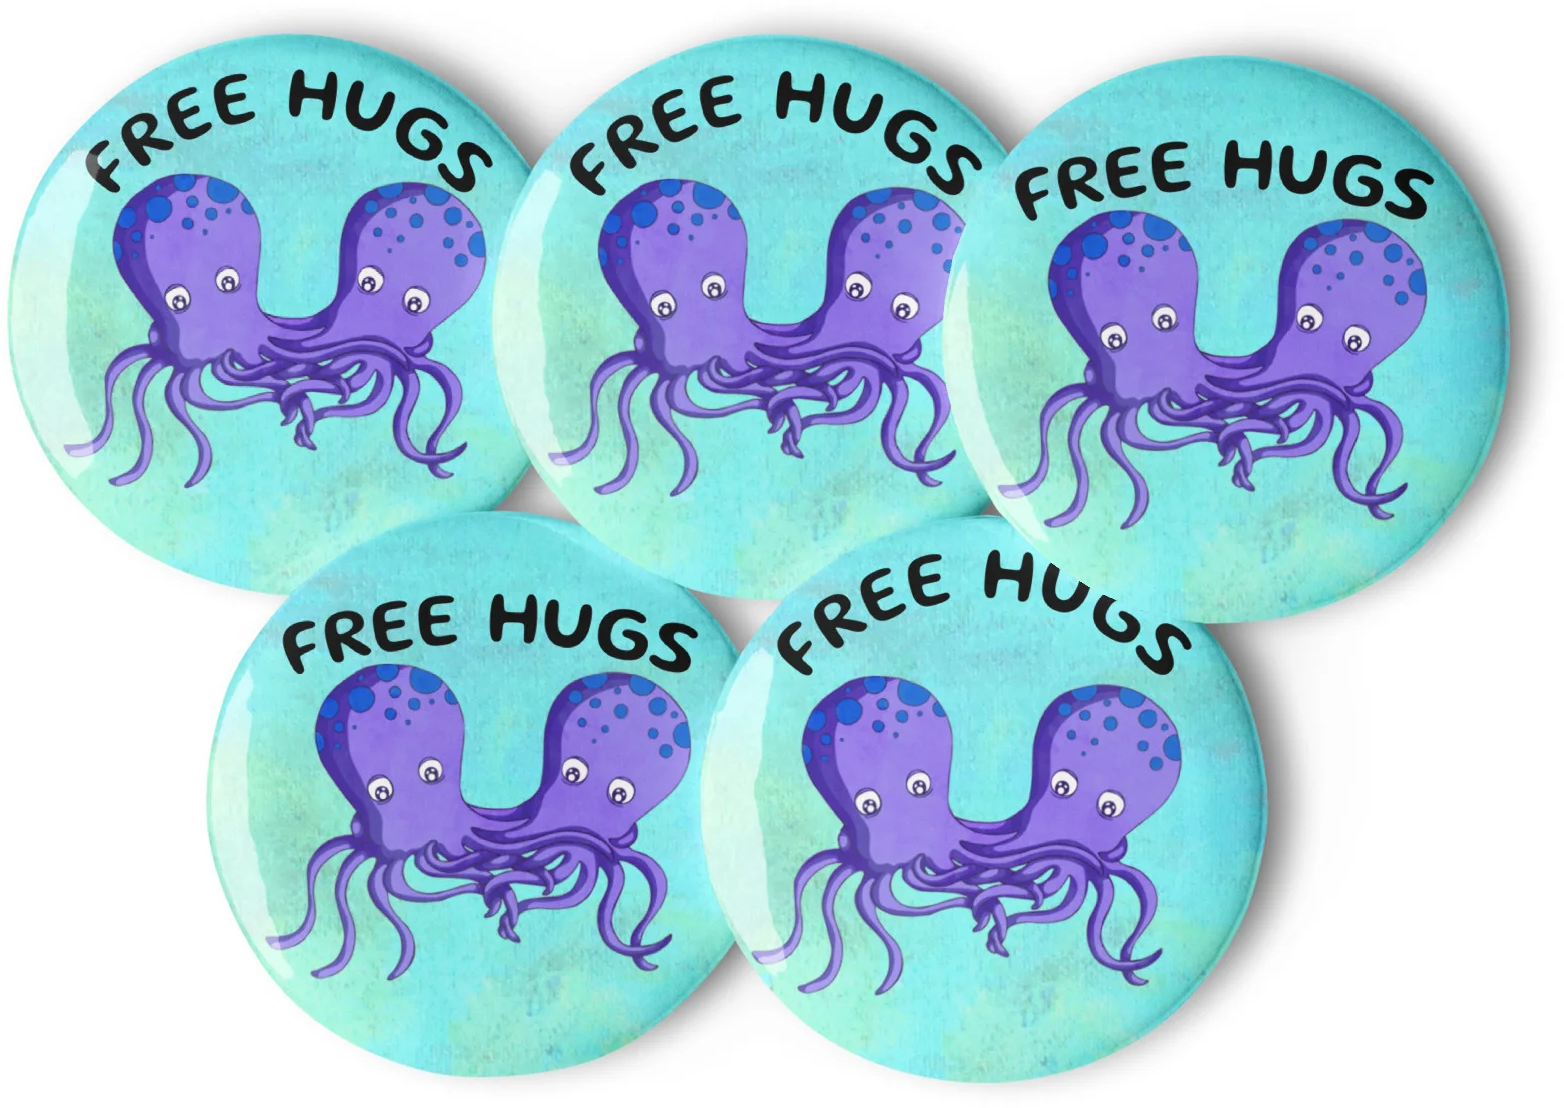 Free Hugs octopus pin buttons